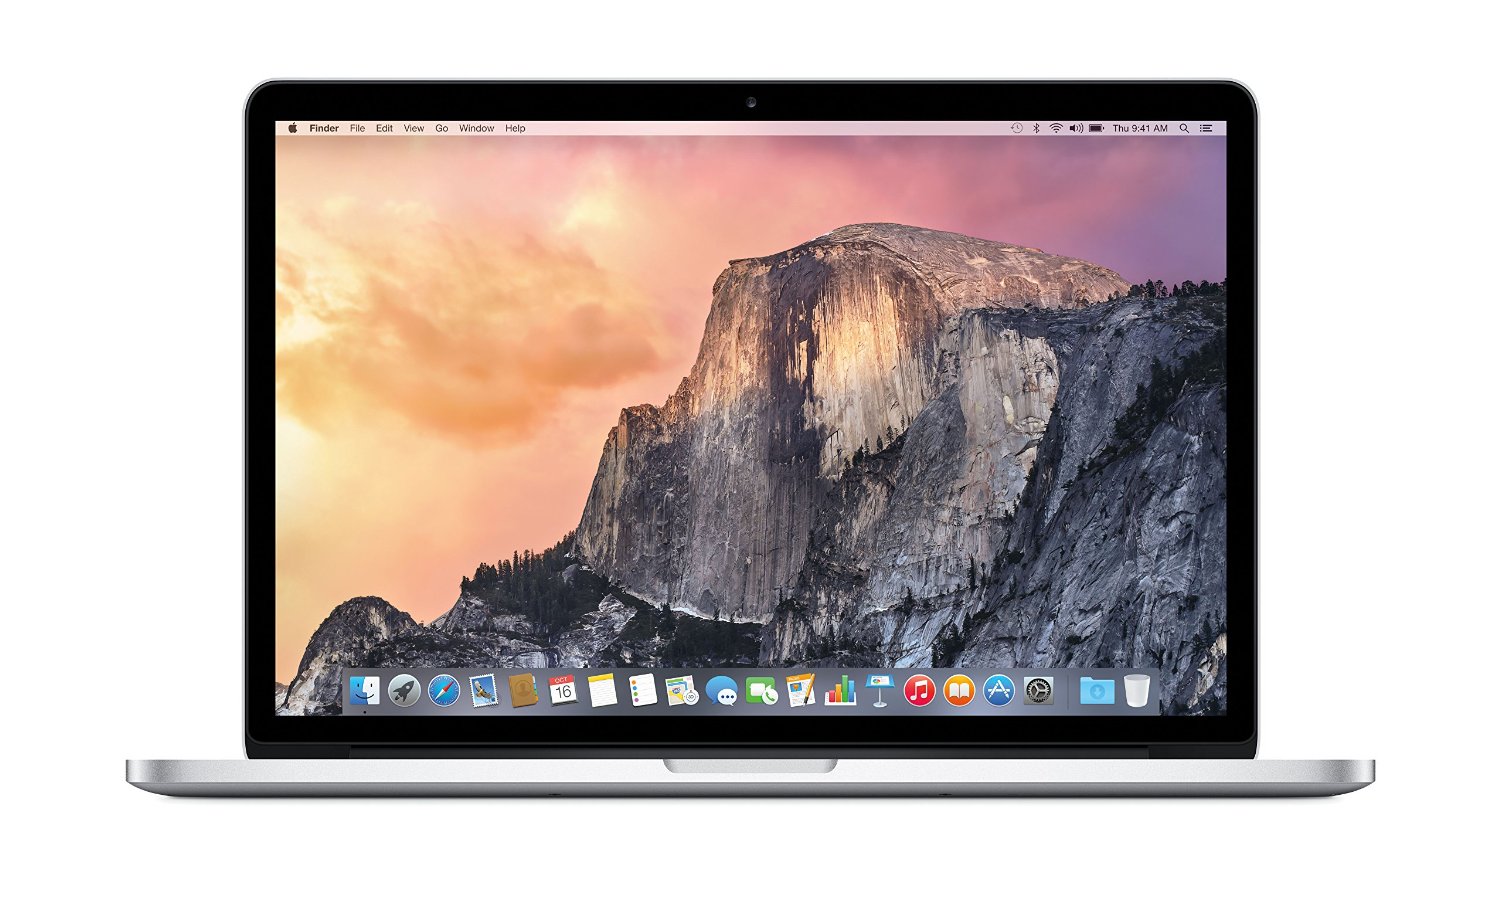 MacBook Pro 15.4 Inch with Retina Display